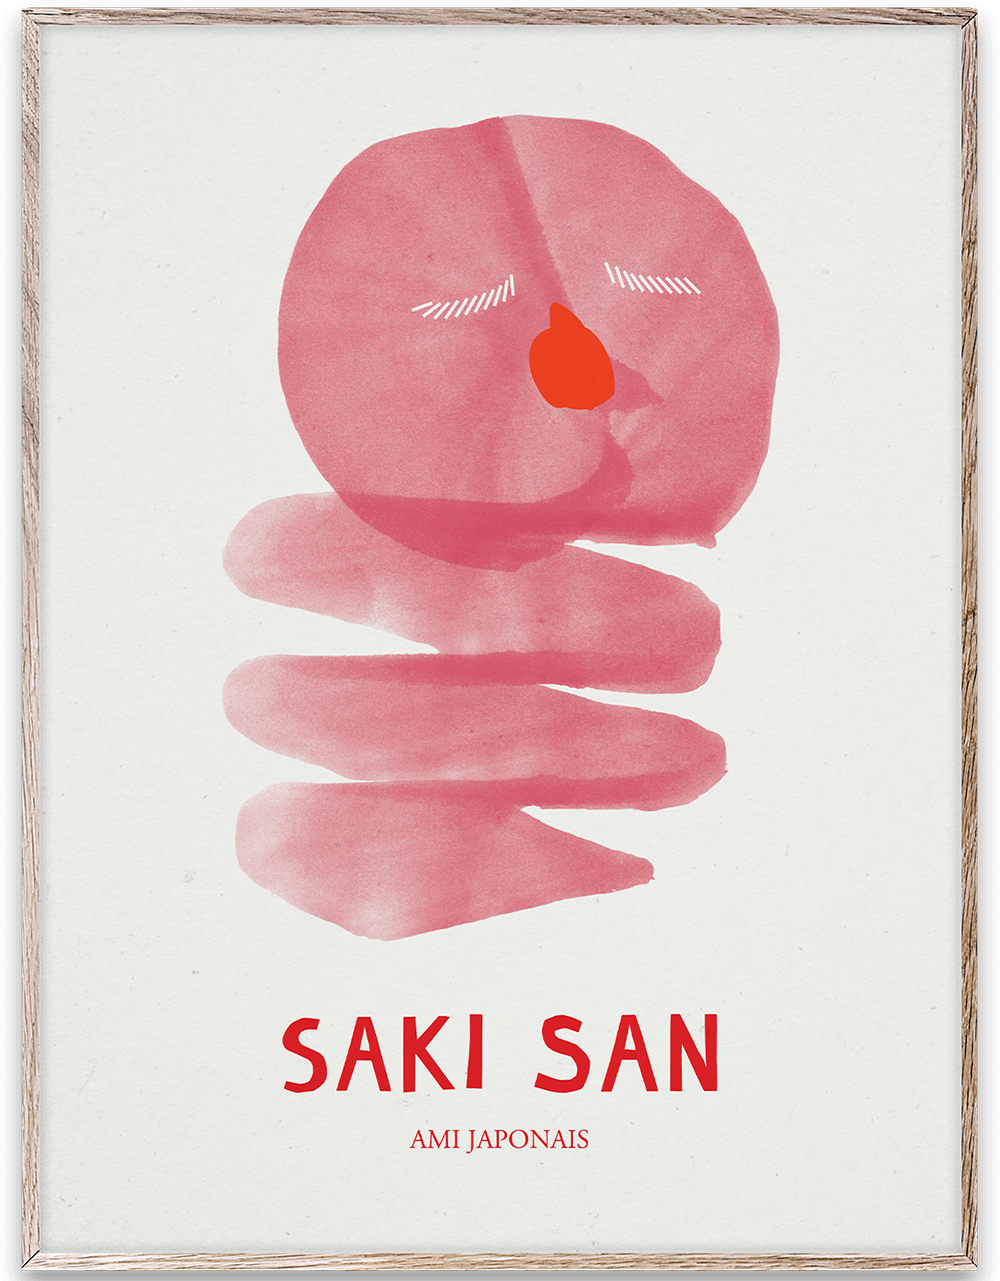 Saki San - KAQTU Design